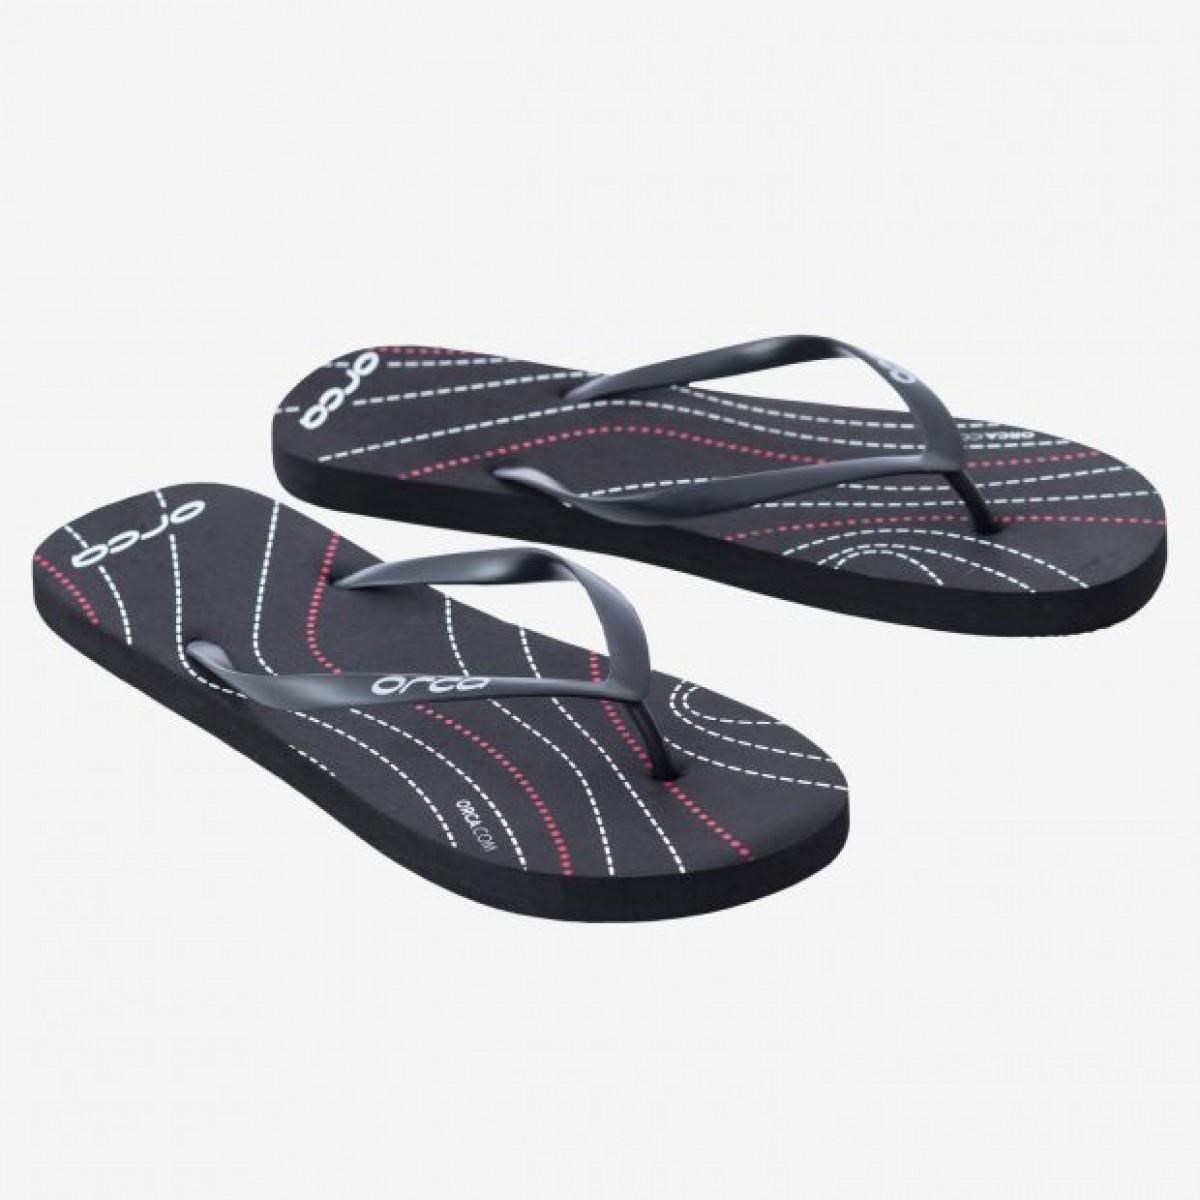 Orca Flip Flops product image